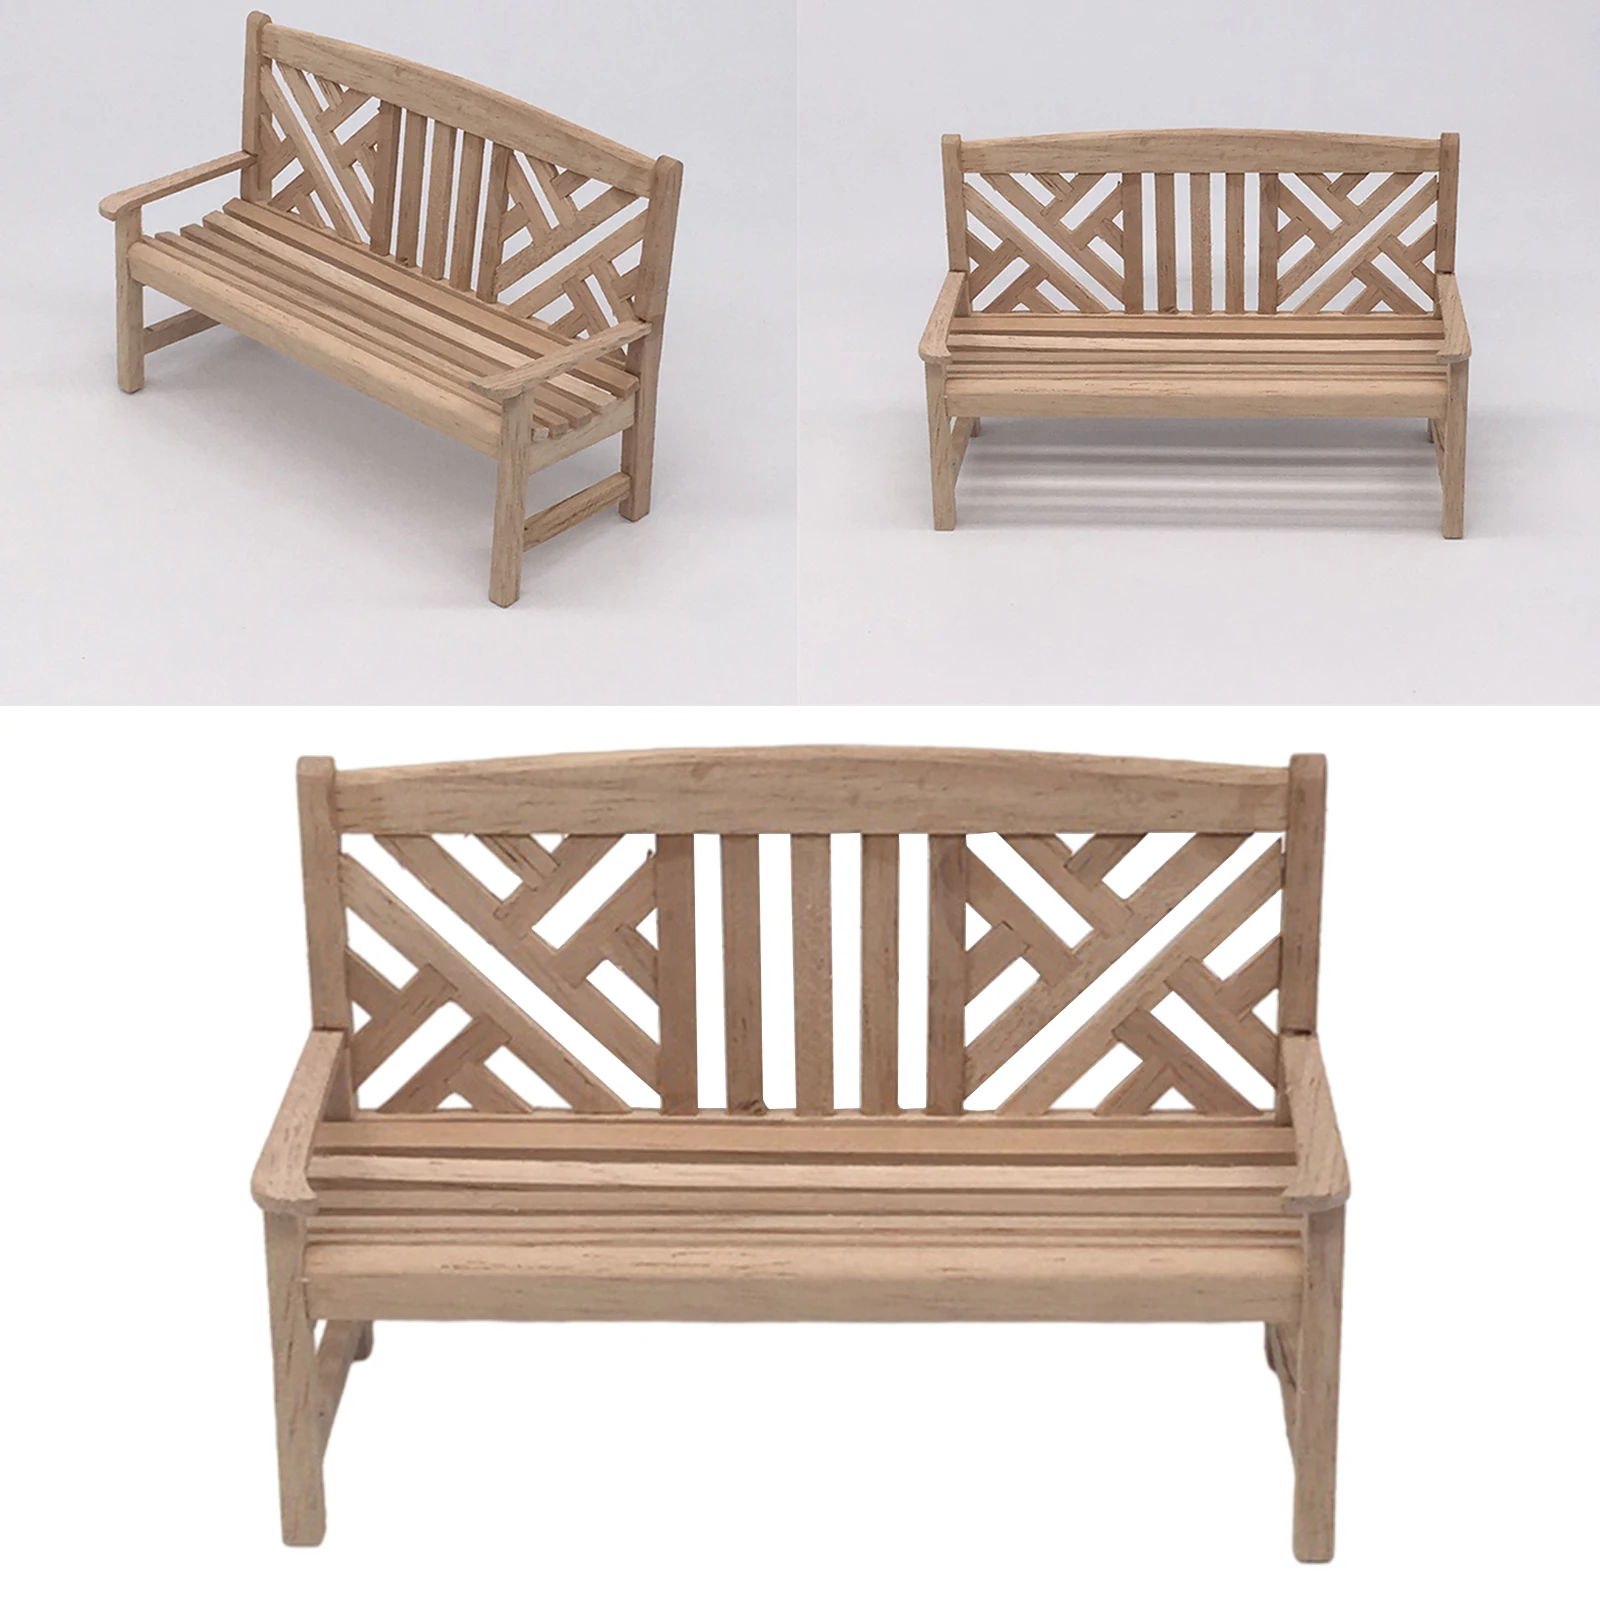 Details about   Wood 1:12 Chair Puppenhaus Furniture Unpainted Garden Bench Christmas Gift 